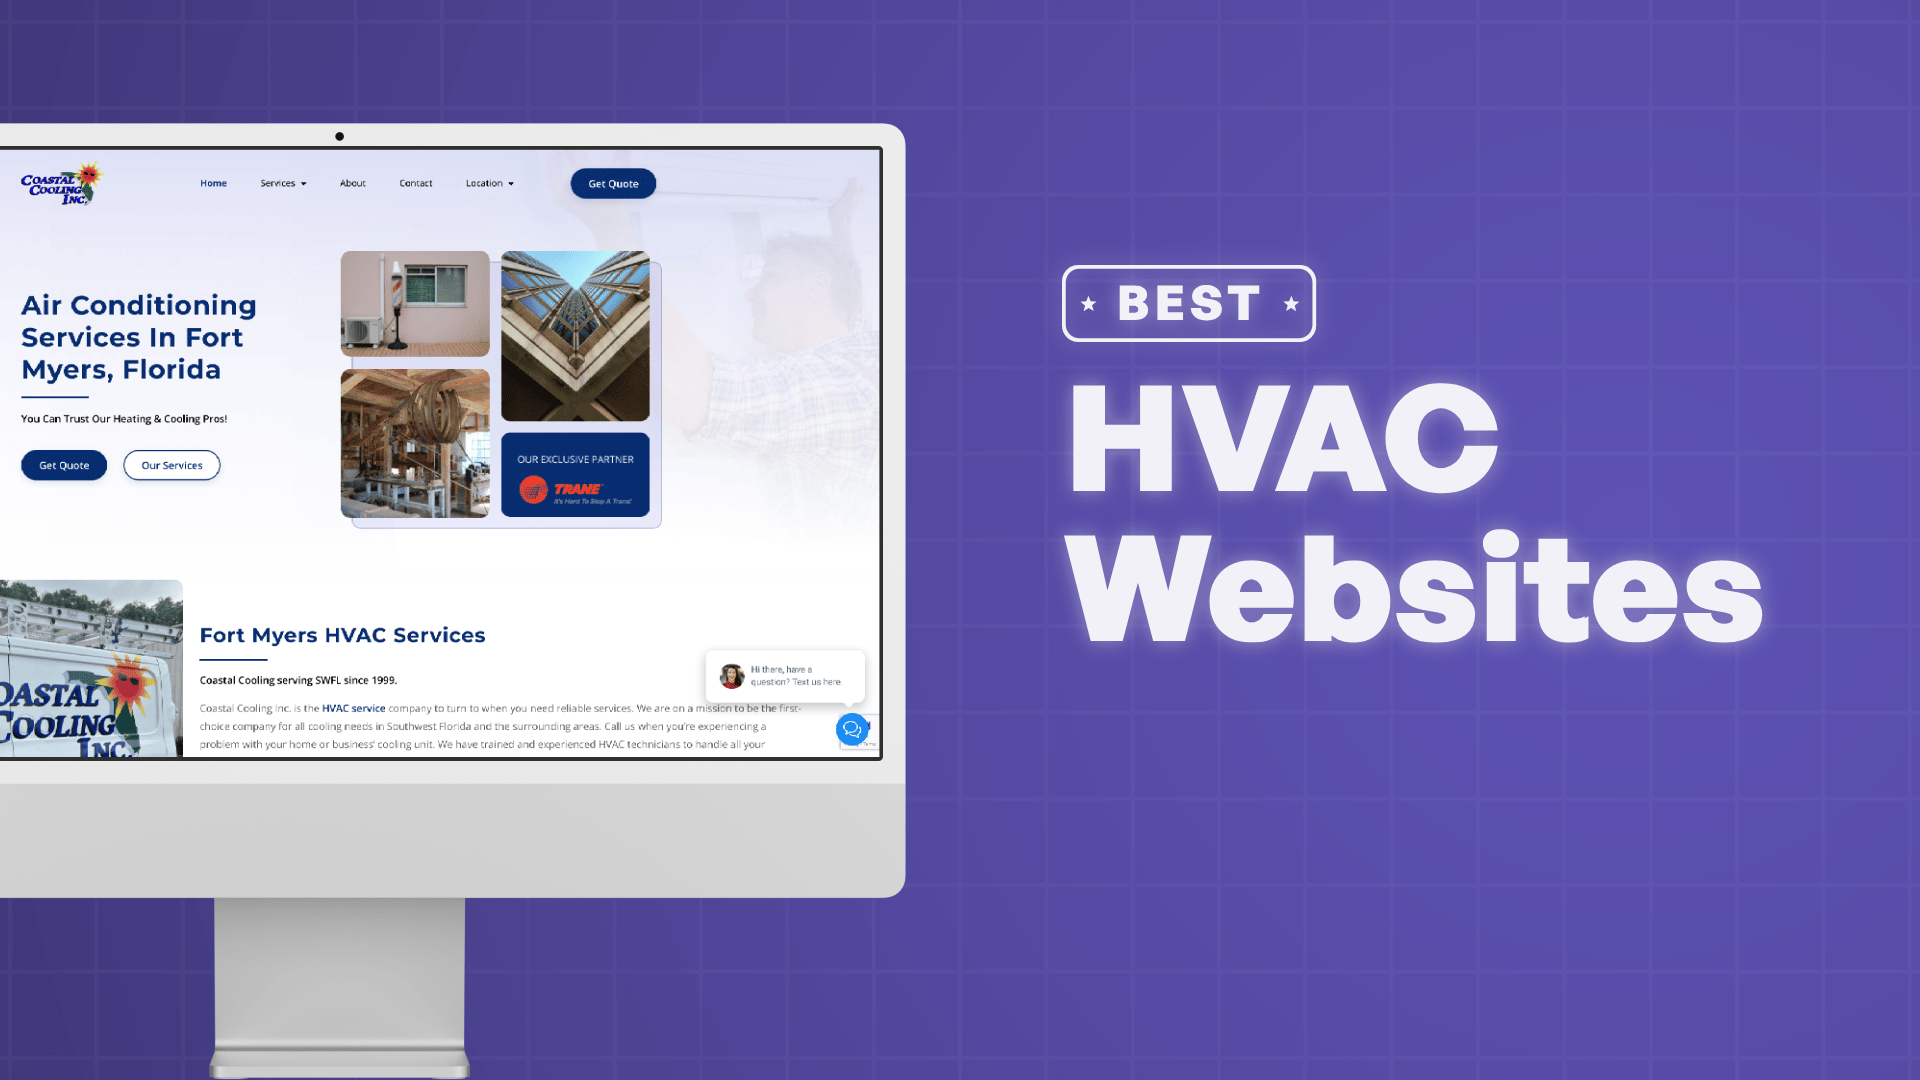 "Best HVAC Websites" with screenshots of the best HVAC websites